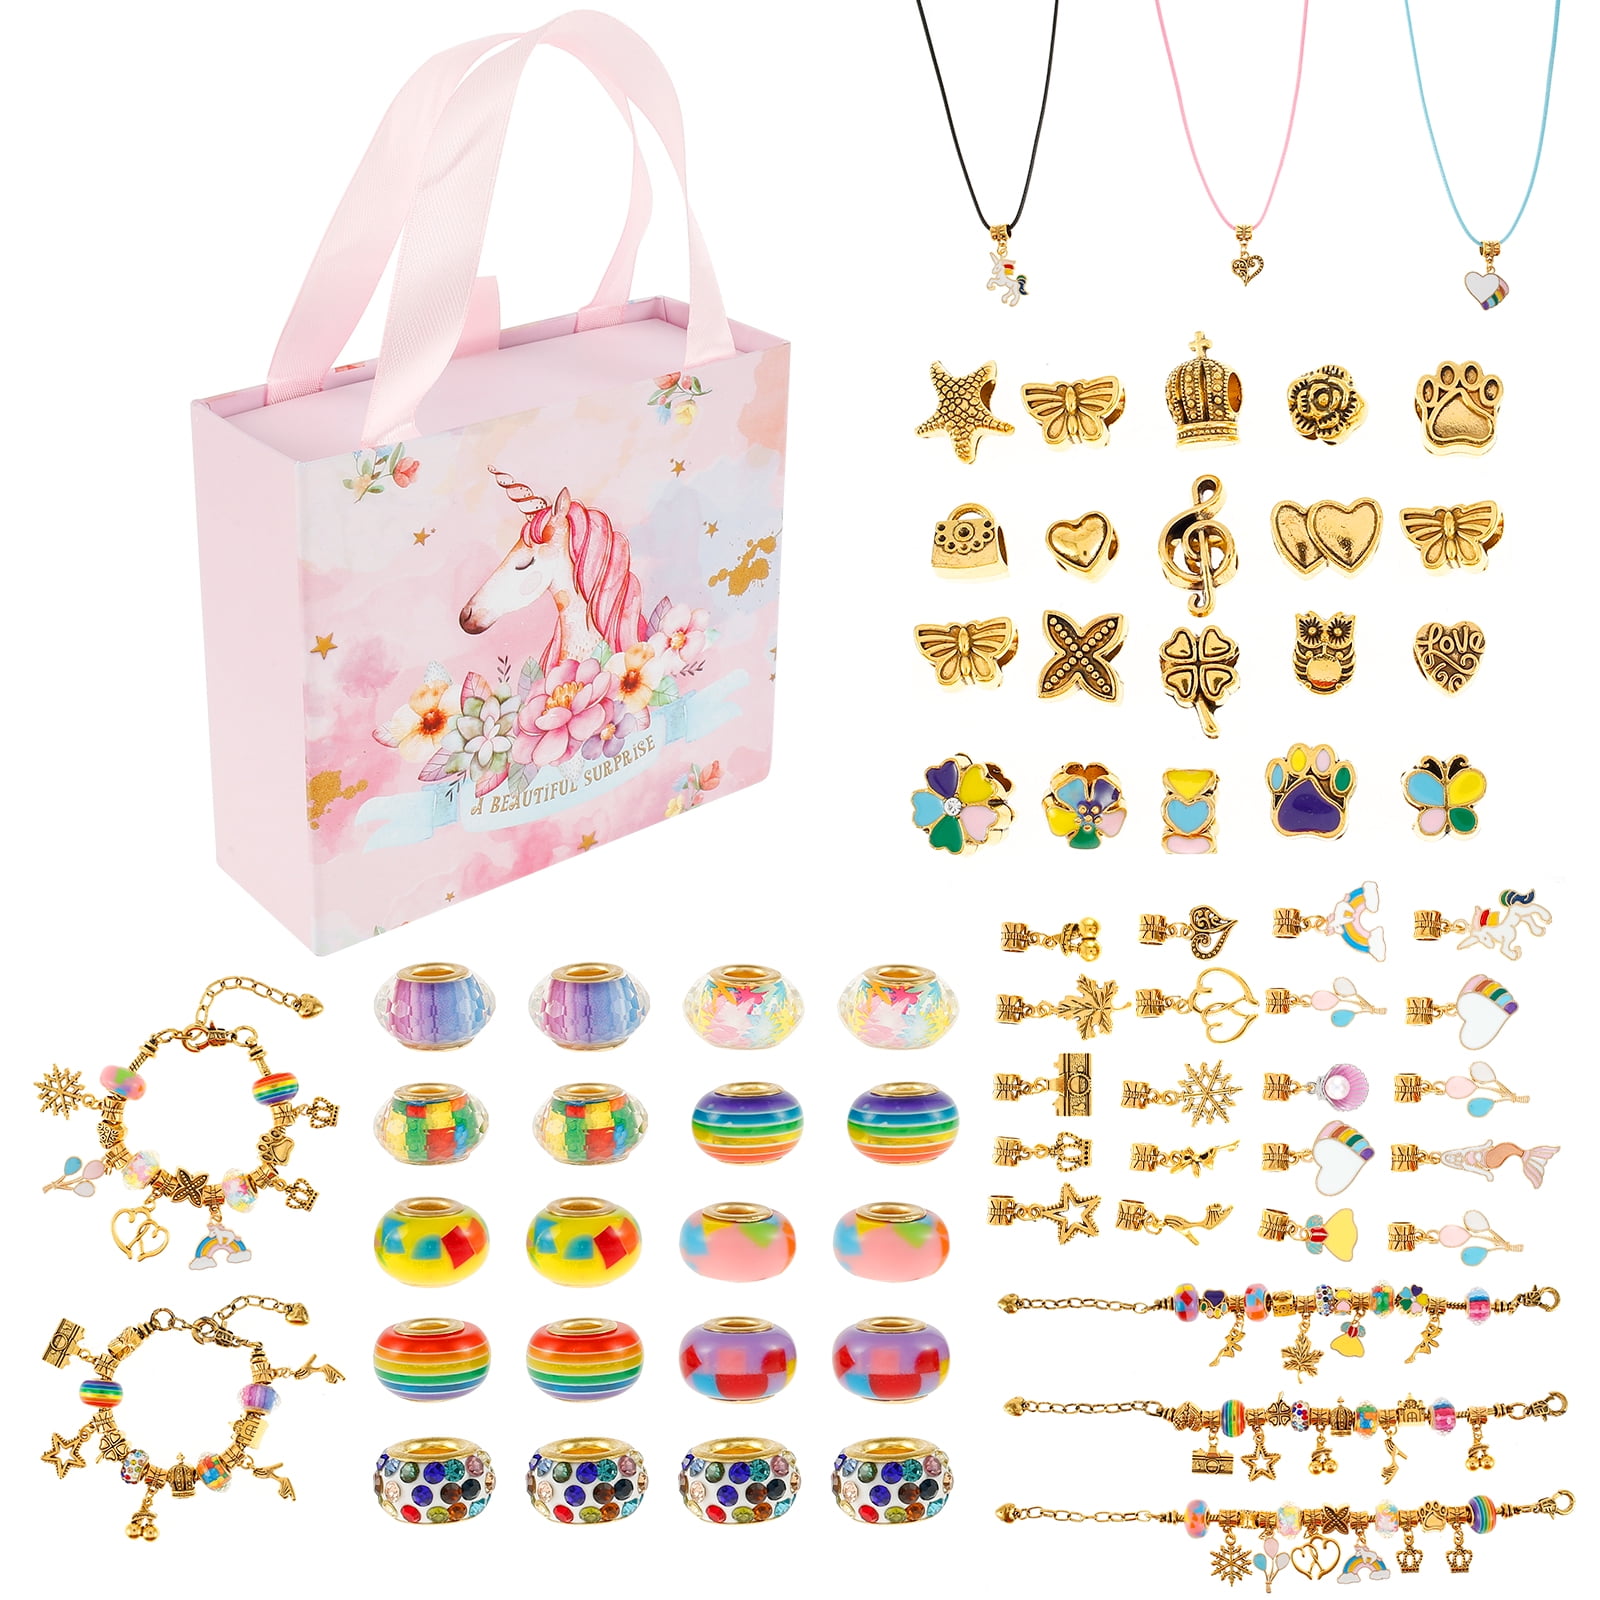 Tcwhniev Charm Bracelet Making Kit, Jewellery Making Kit for Girls Gorgeous Rainbow Beads/Mermaid Crafts Gifts Set,Jewelry Making DIY Necklaces